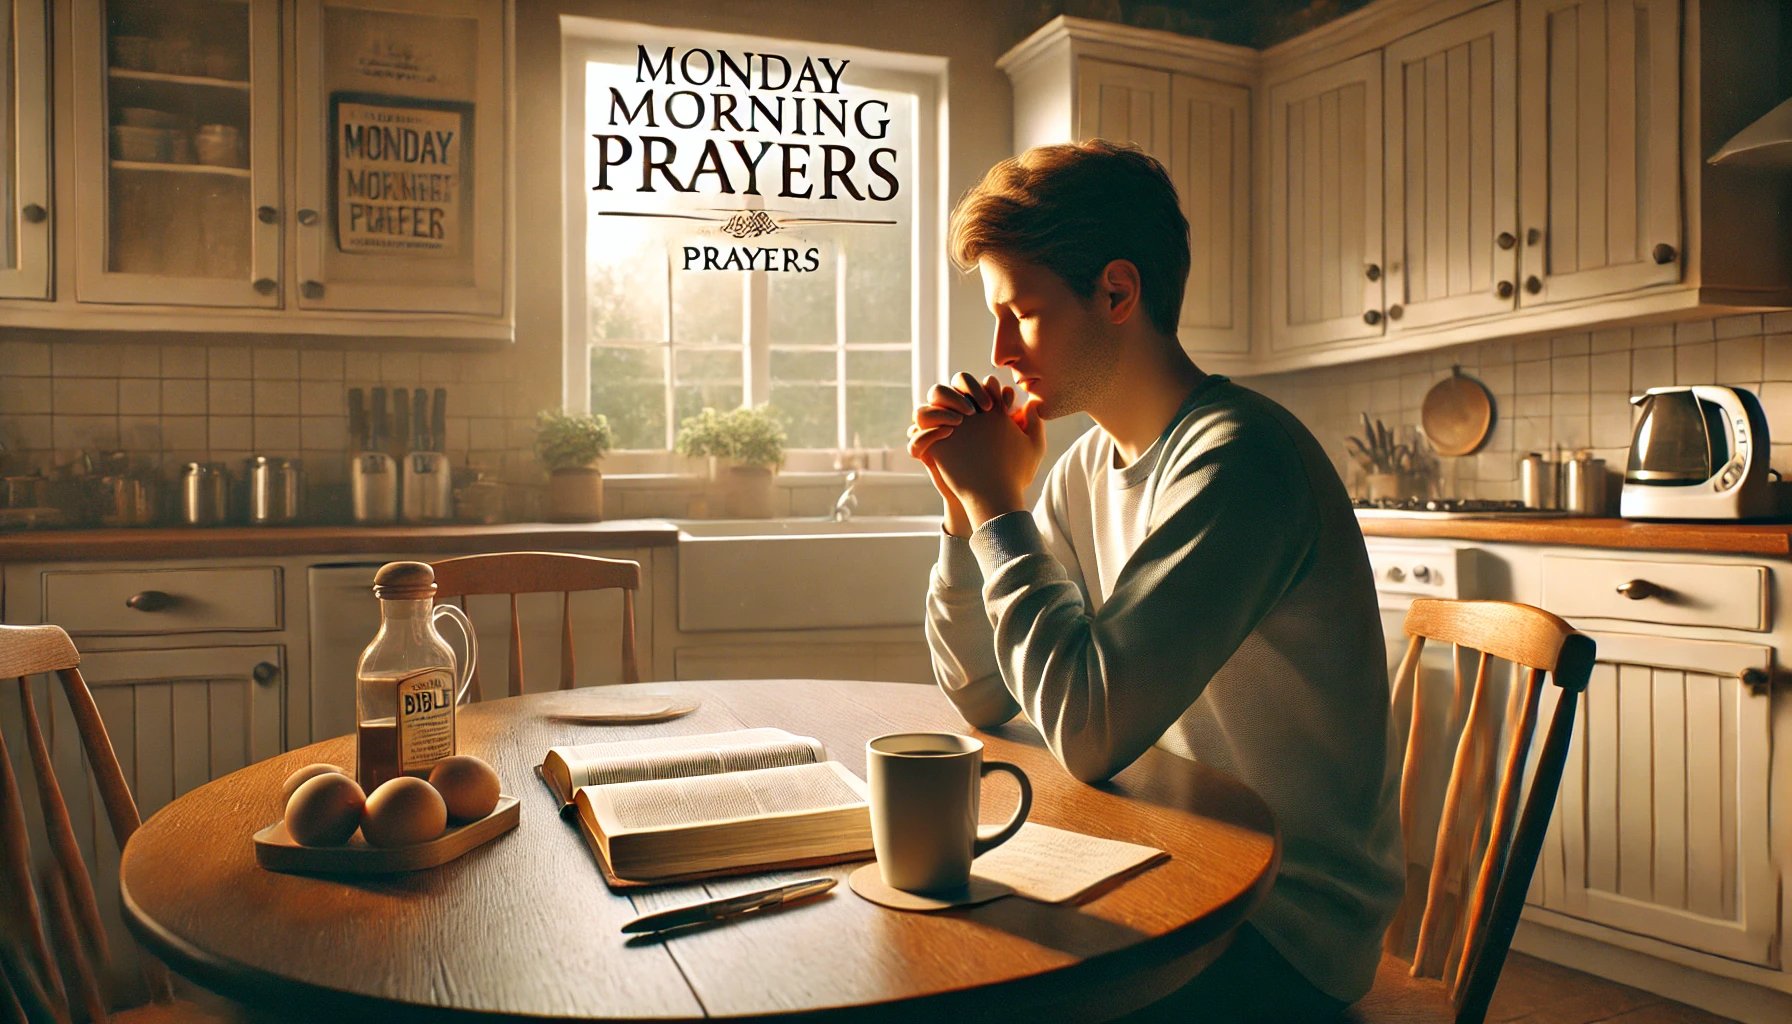 20 Monday Morning Prayers